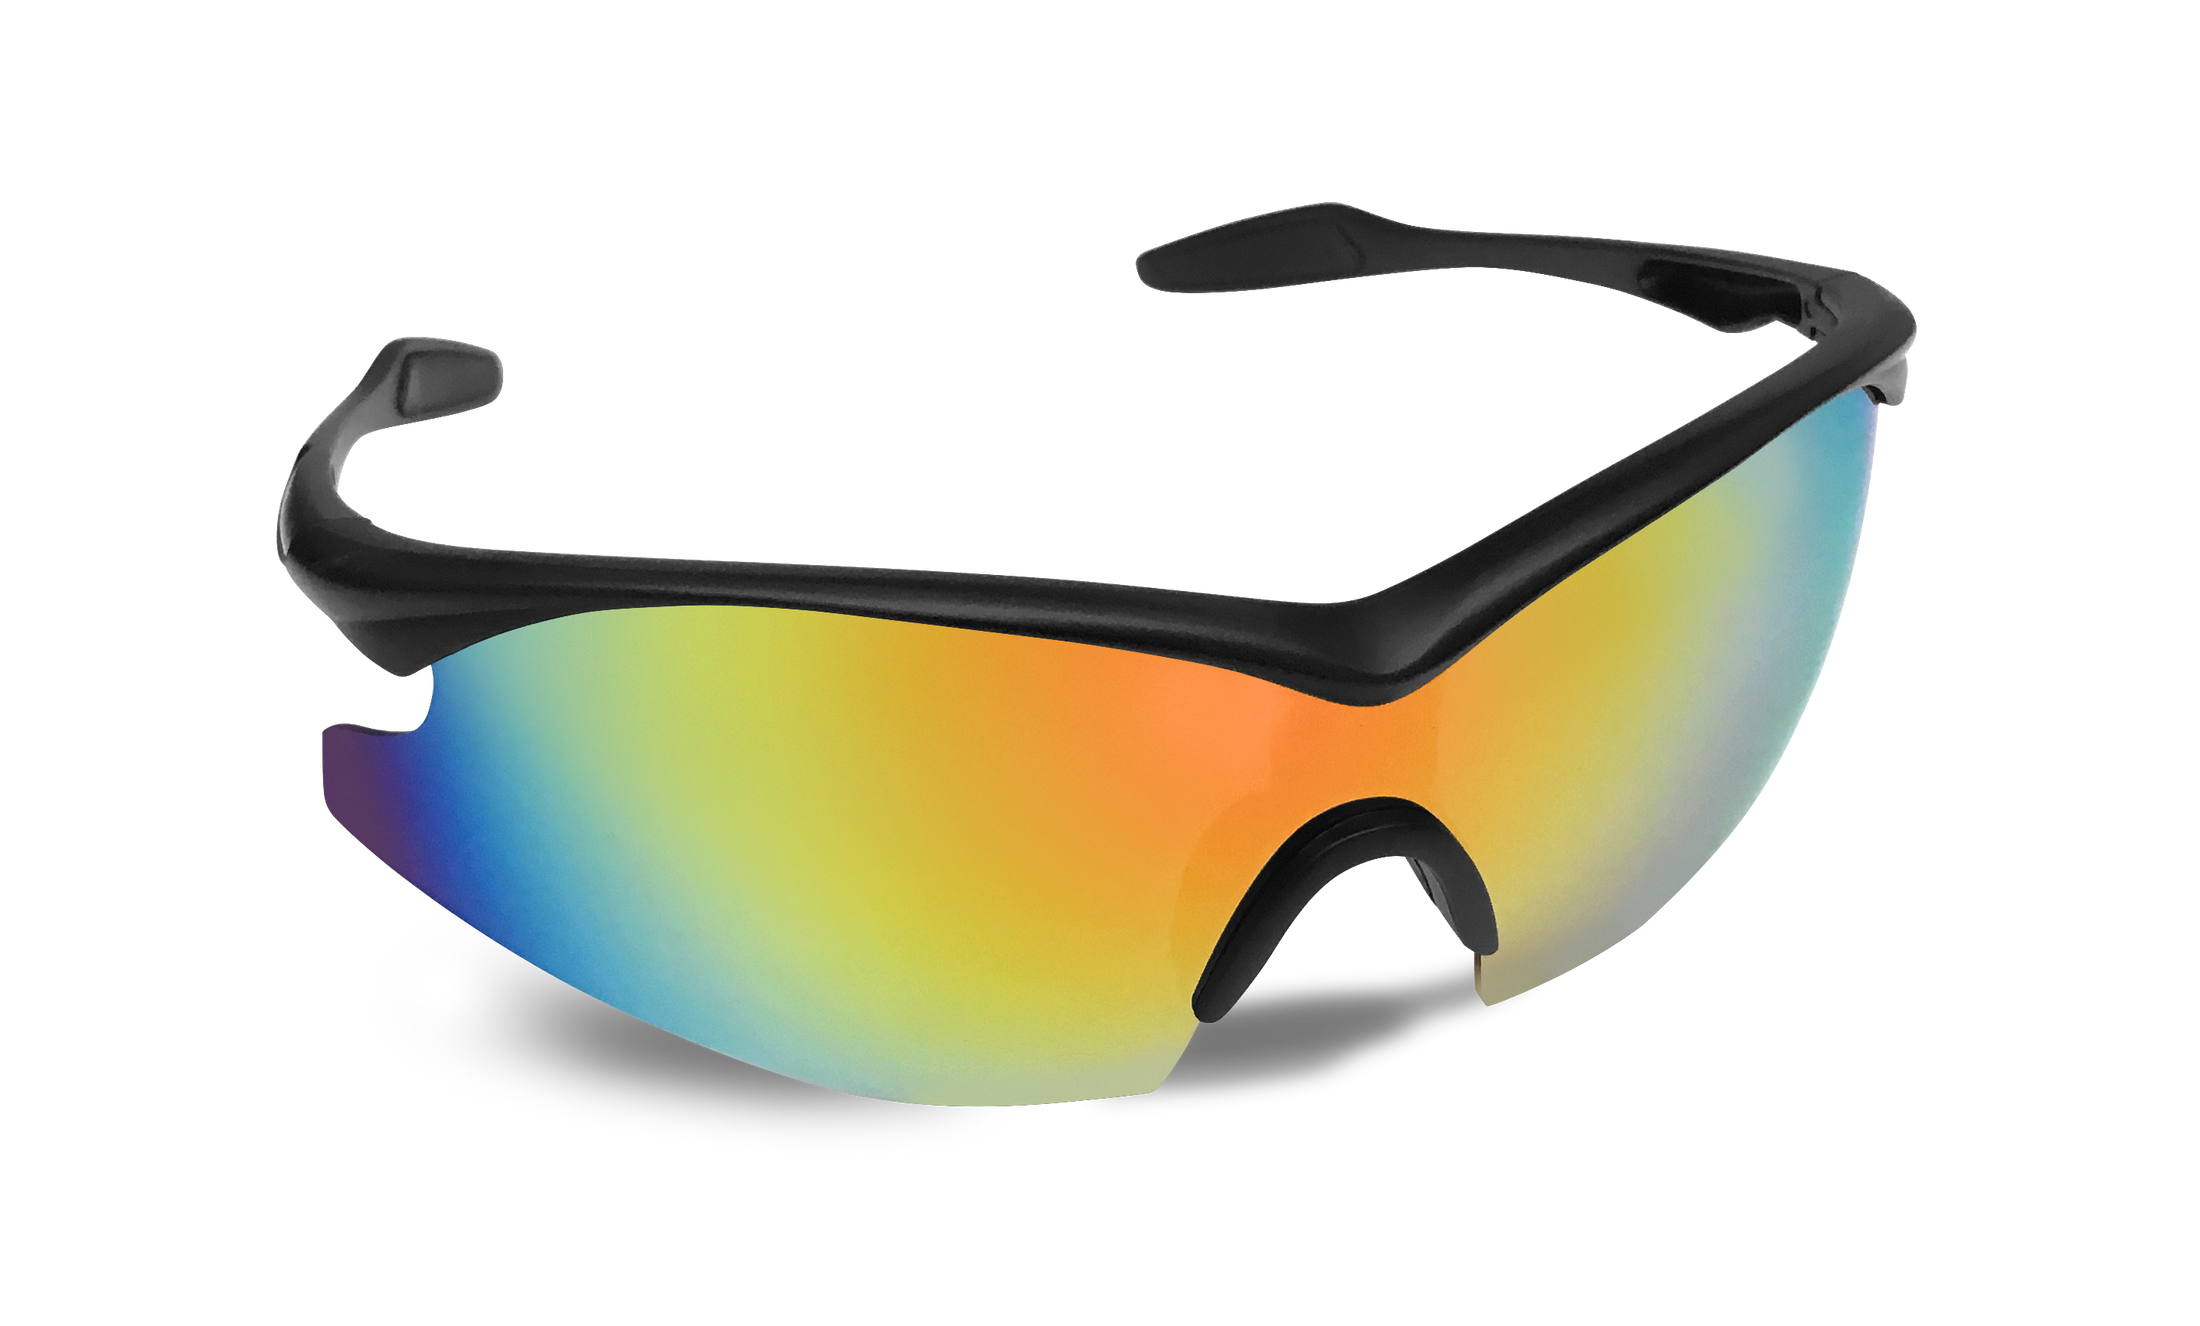 Bell Howell Tacglasses Sports Polarized Sunglasses For Men Women Cyc 